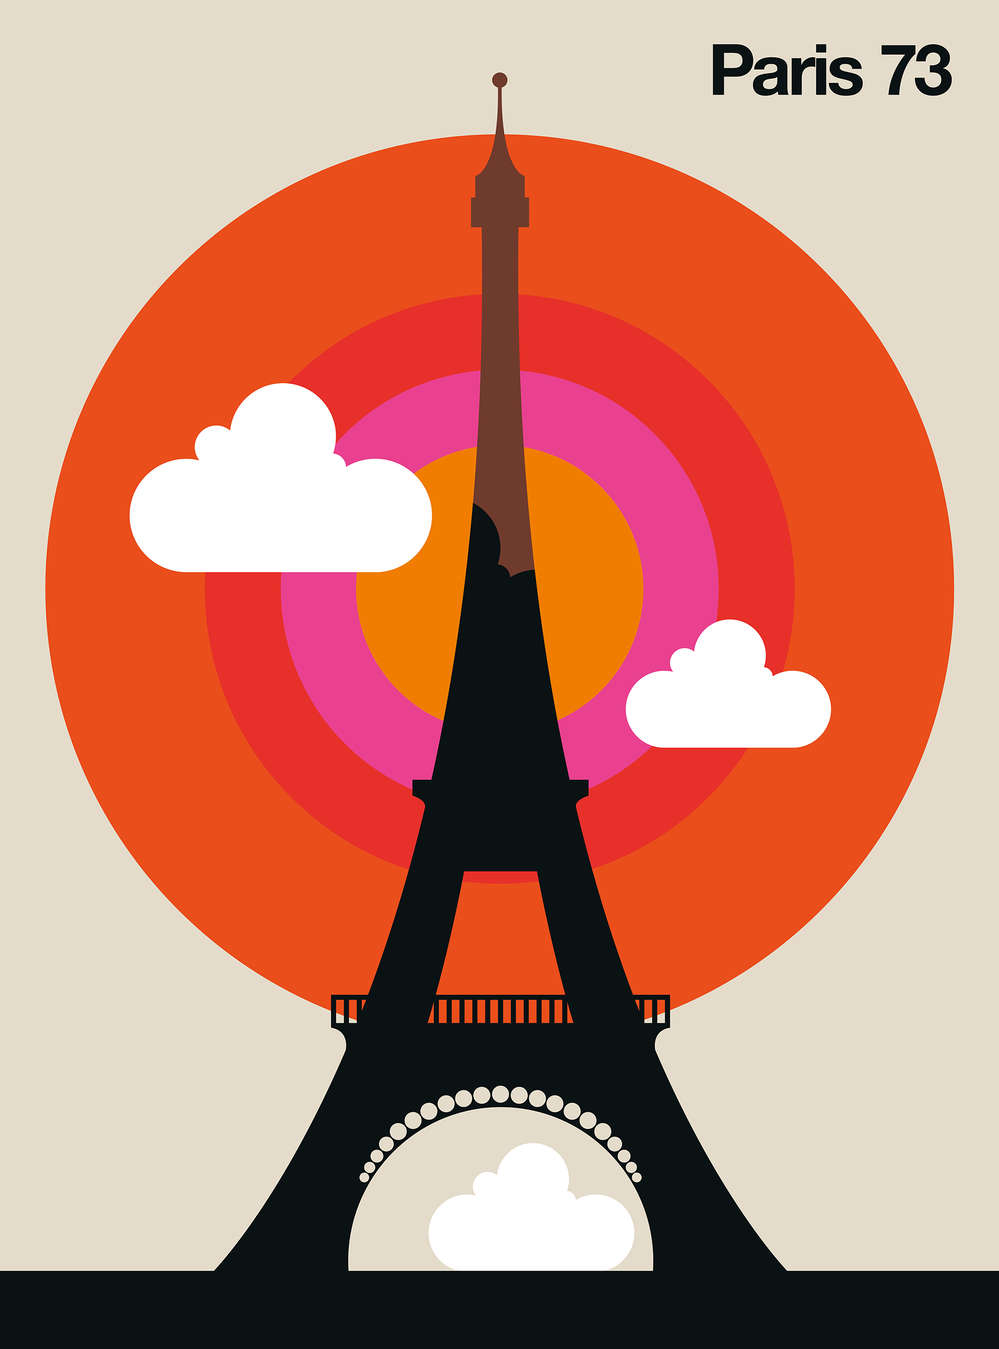             Fototapete Paris mit Eiffelturm Motiv im Retro Stil
        